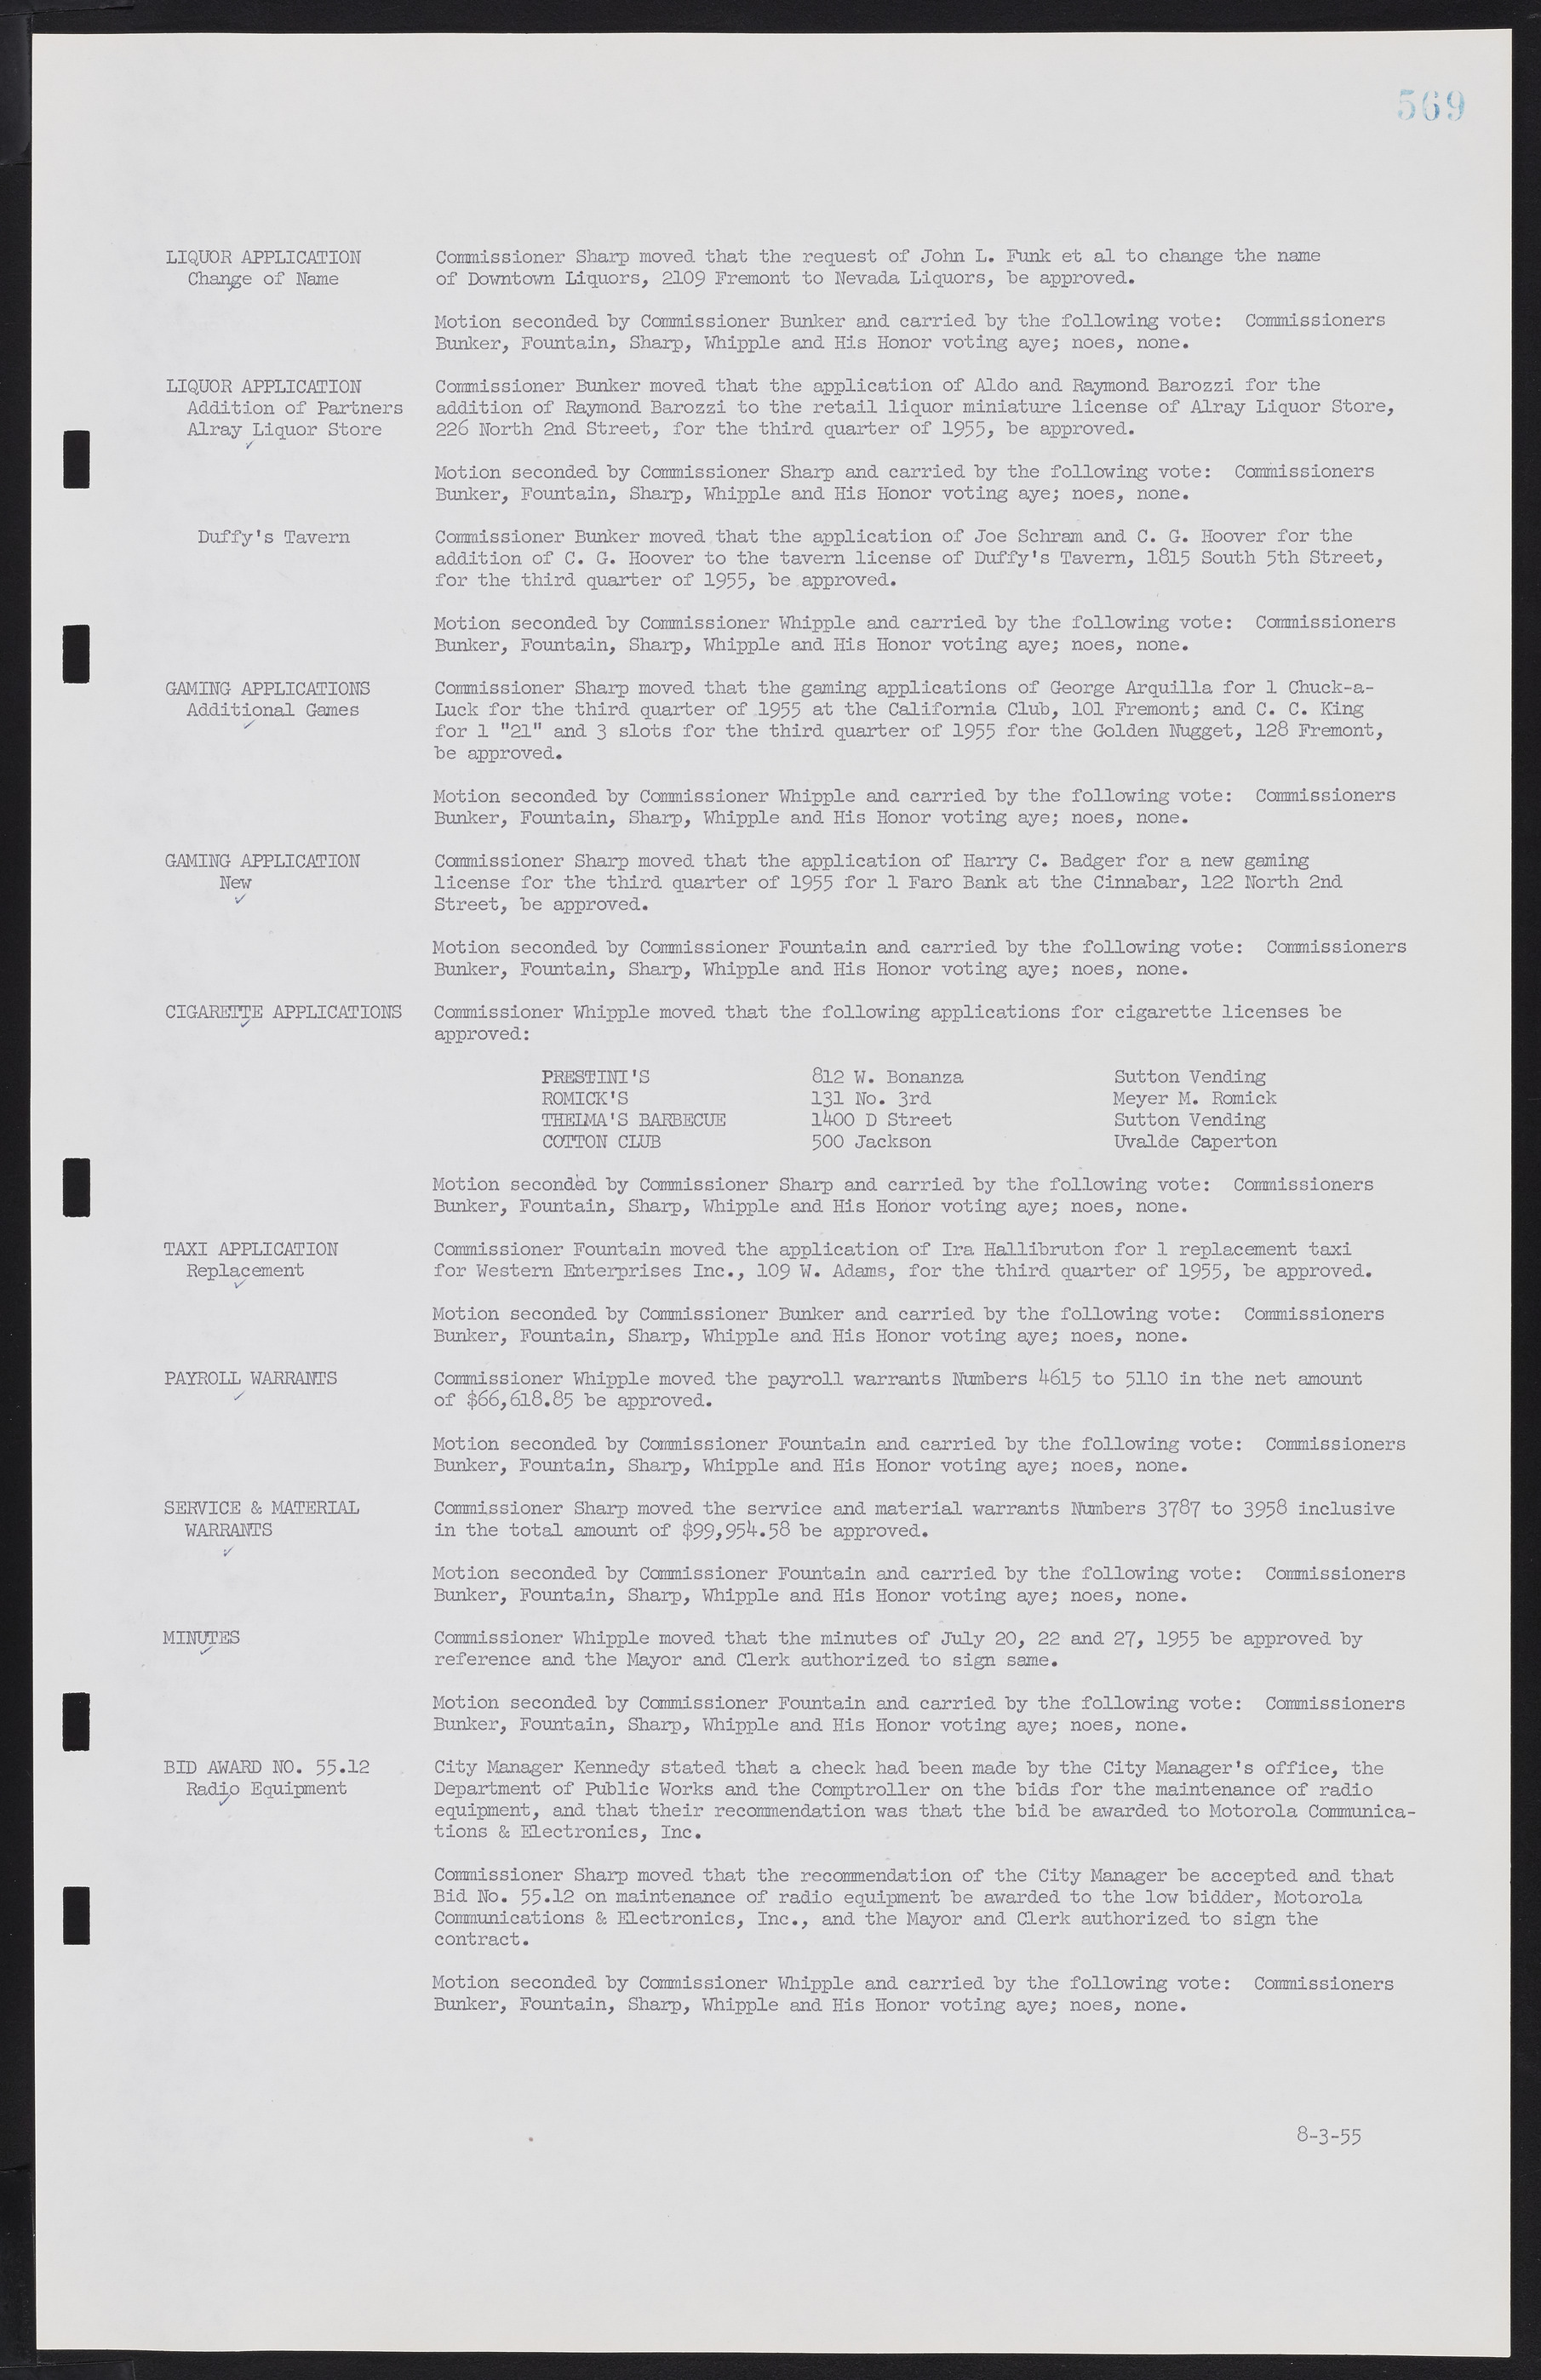 Las Vegas City Commission Minutes, February 17, 1954 to September 21, 1955, lvc000009-575